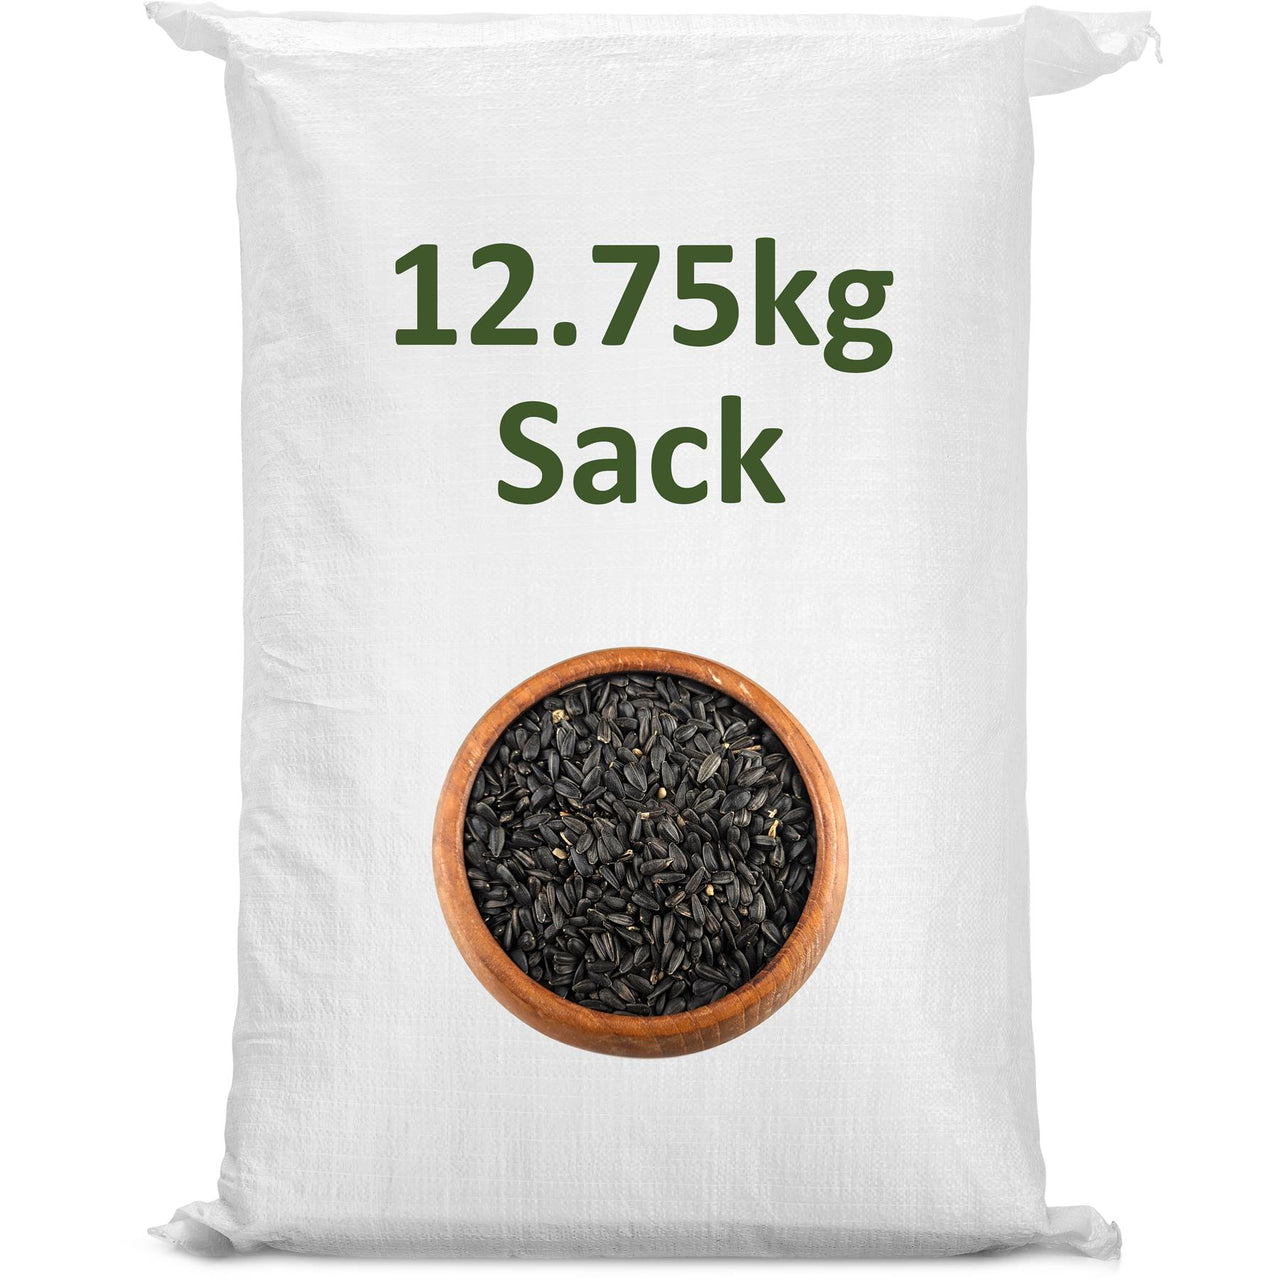 Sunflower Seeds, 12.75kg Sack